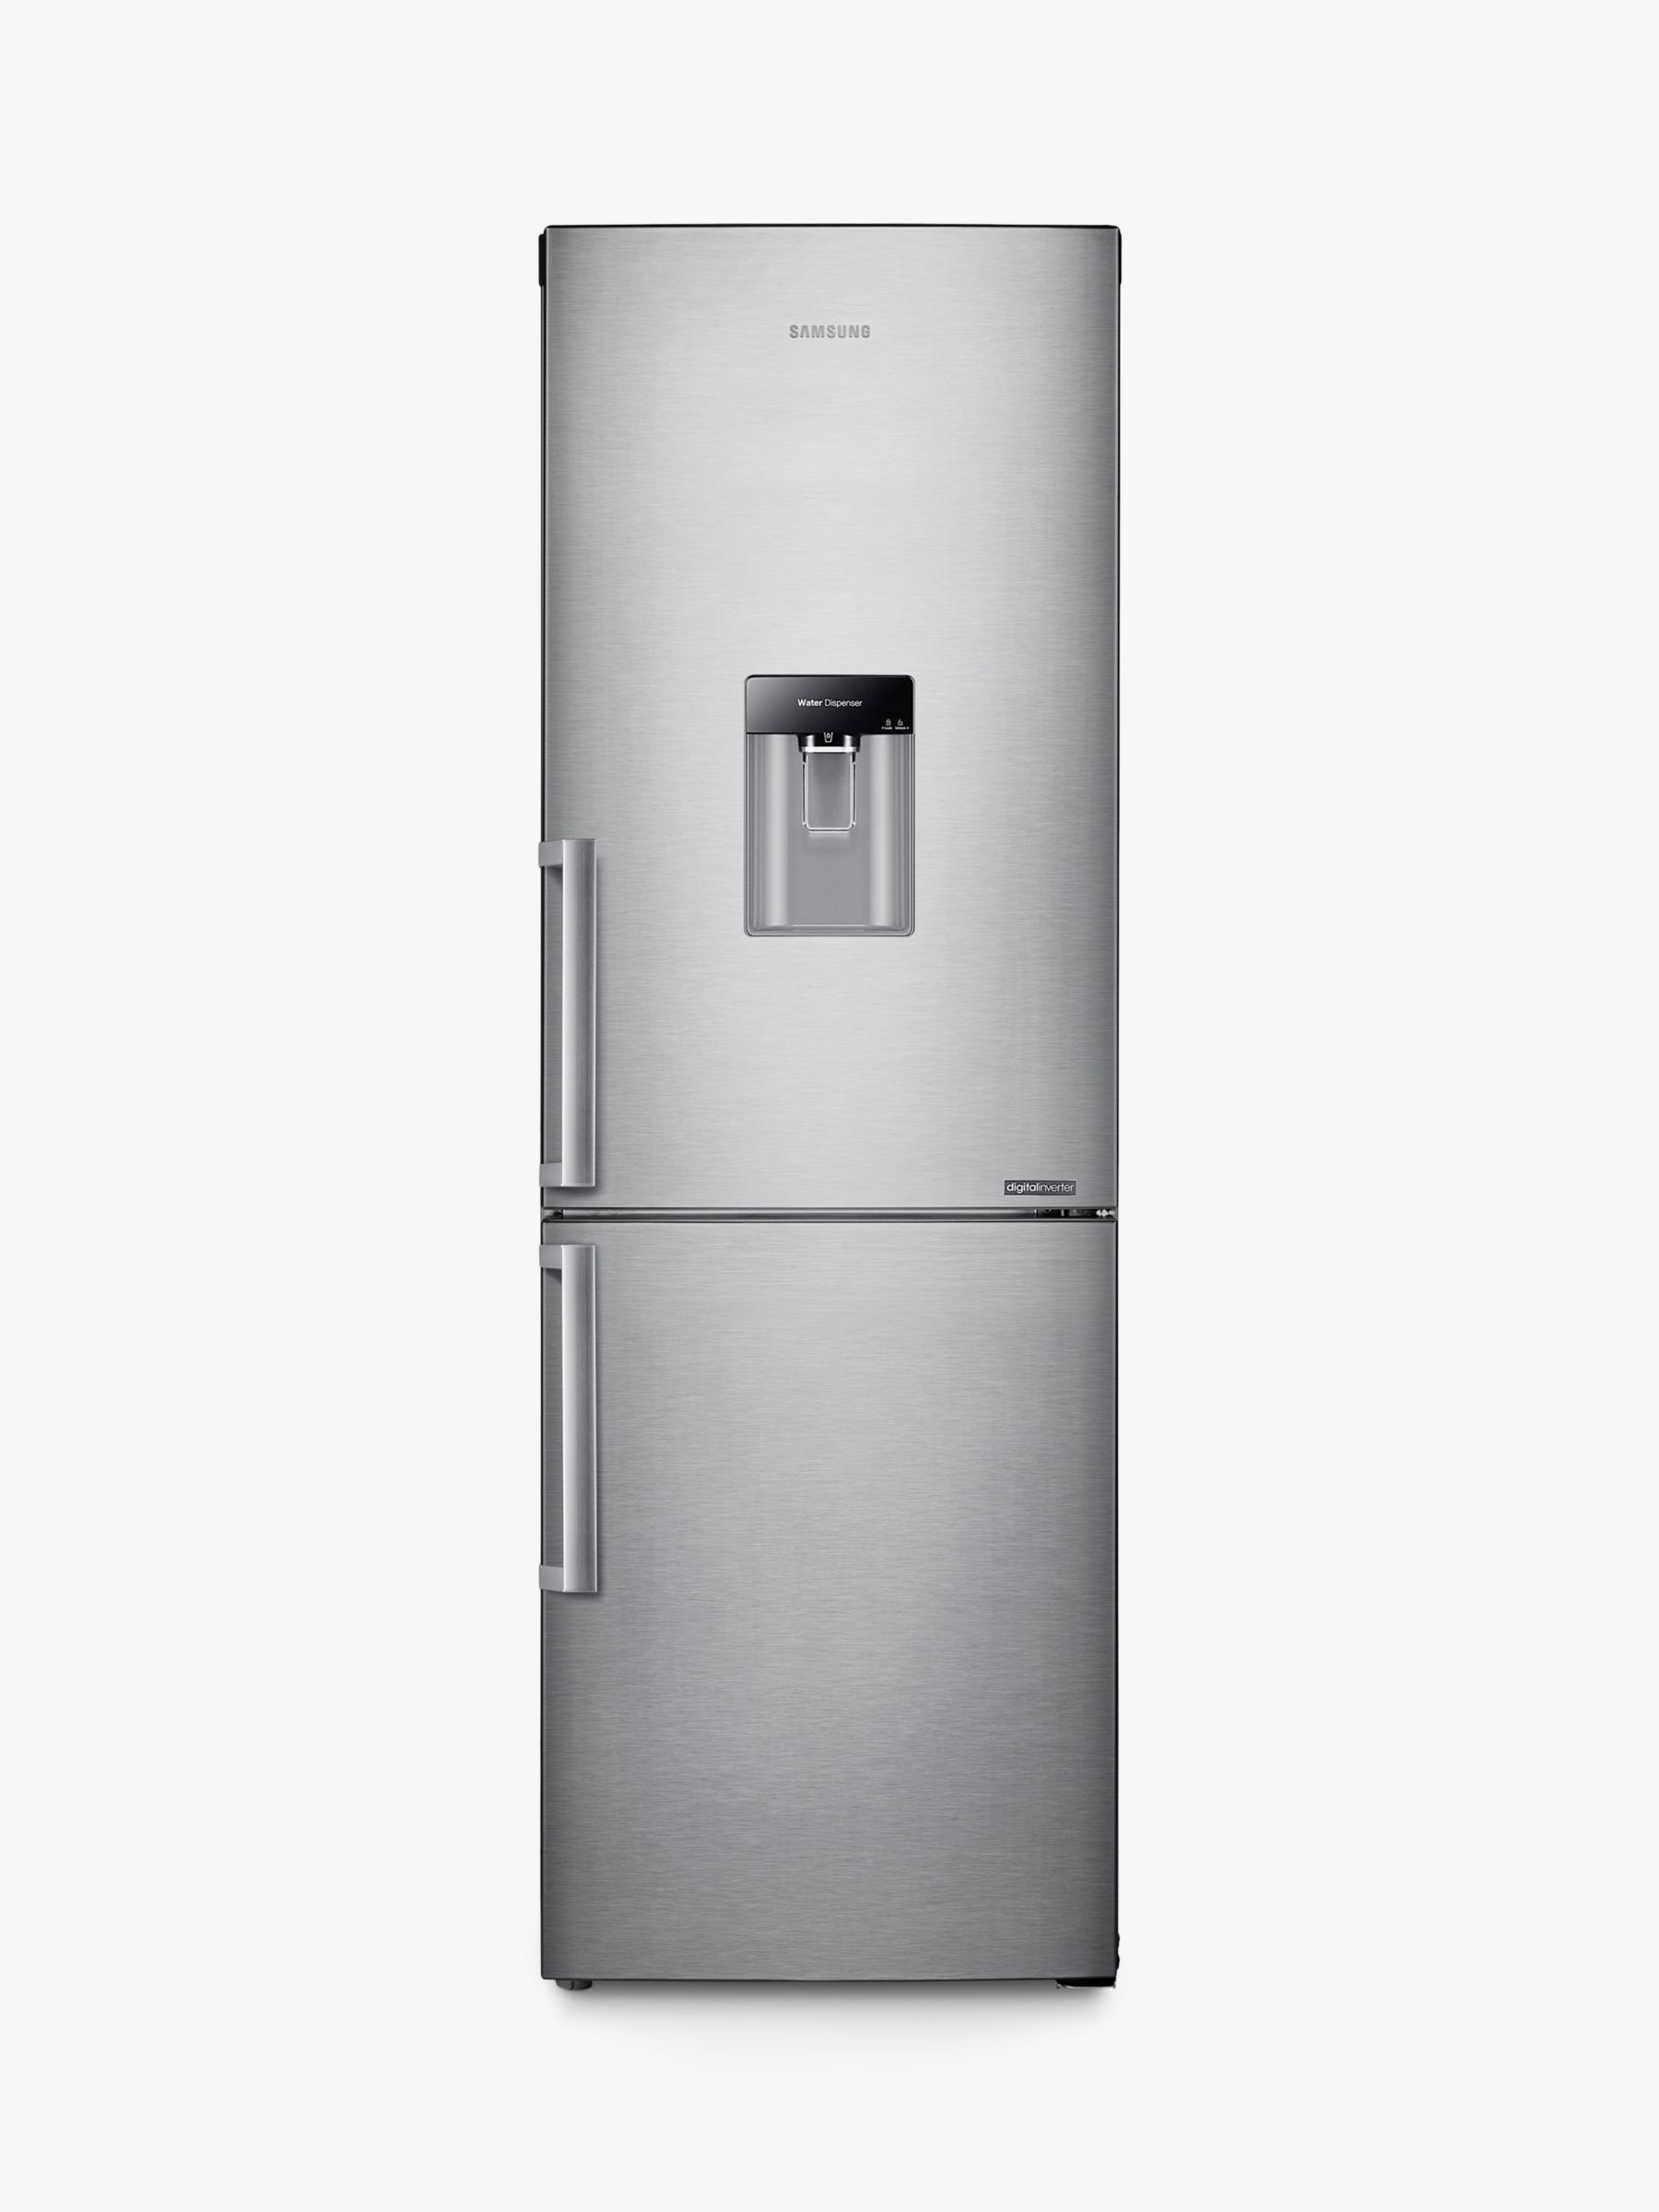 Холодильник Samsung RB-29 FWRNDSA